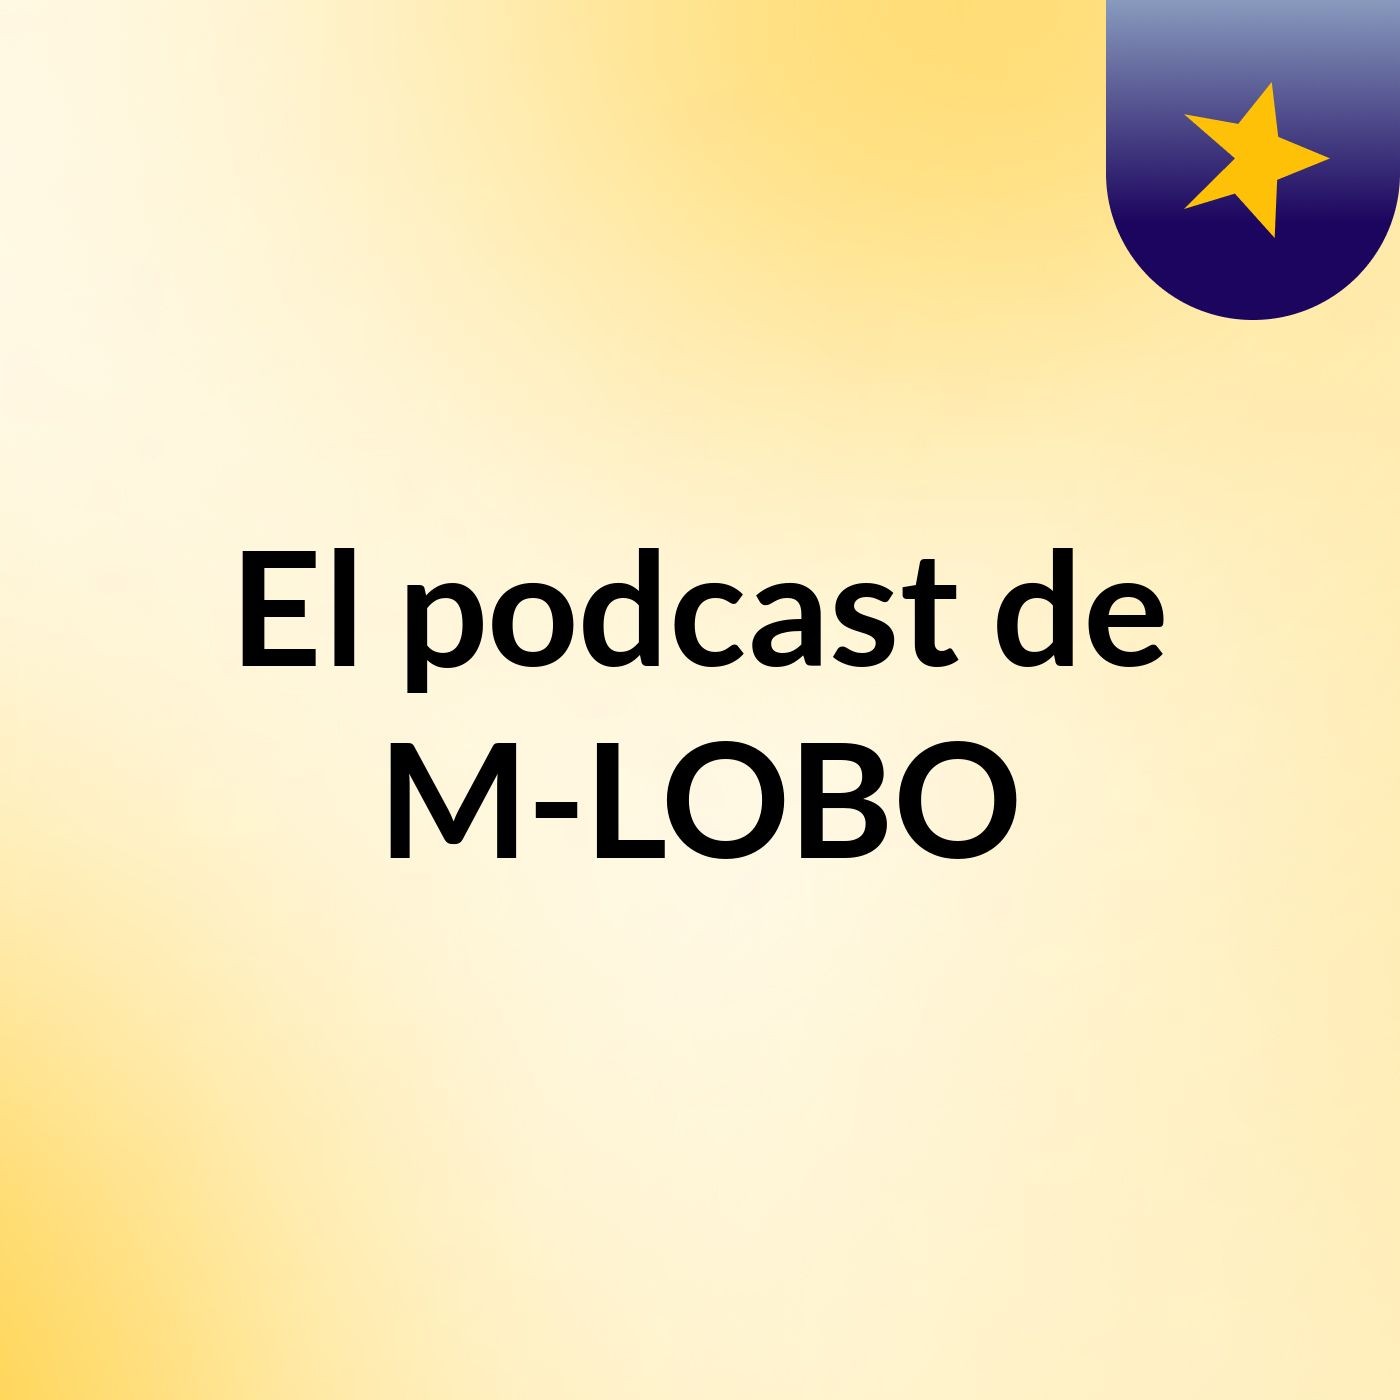 El podcast de M-LOBO